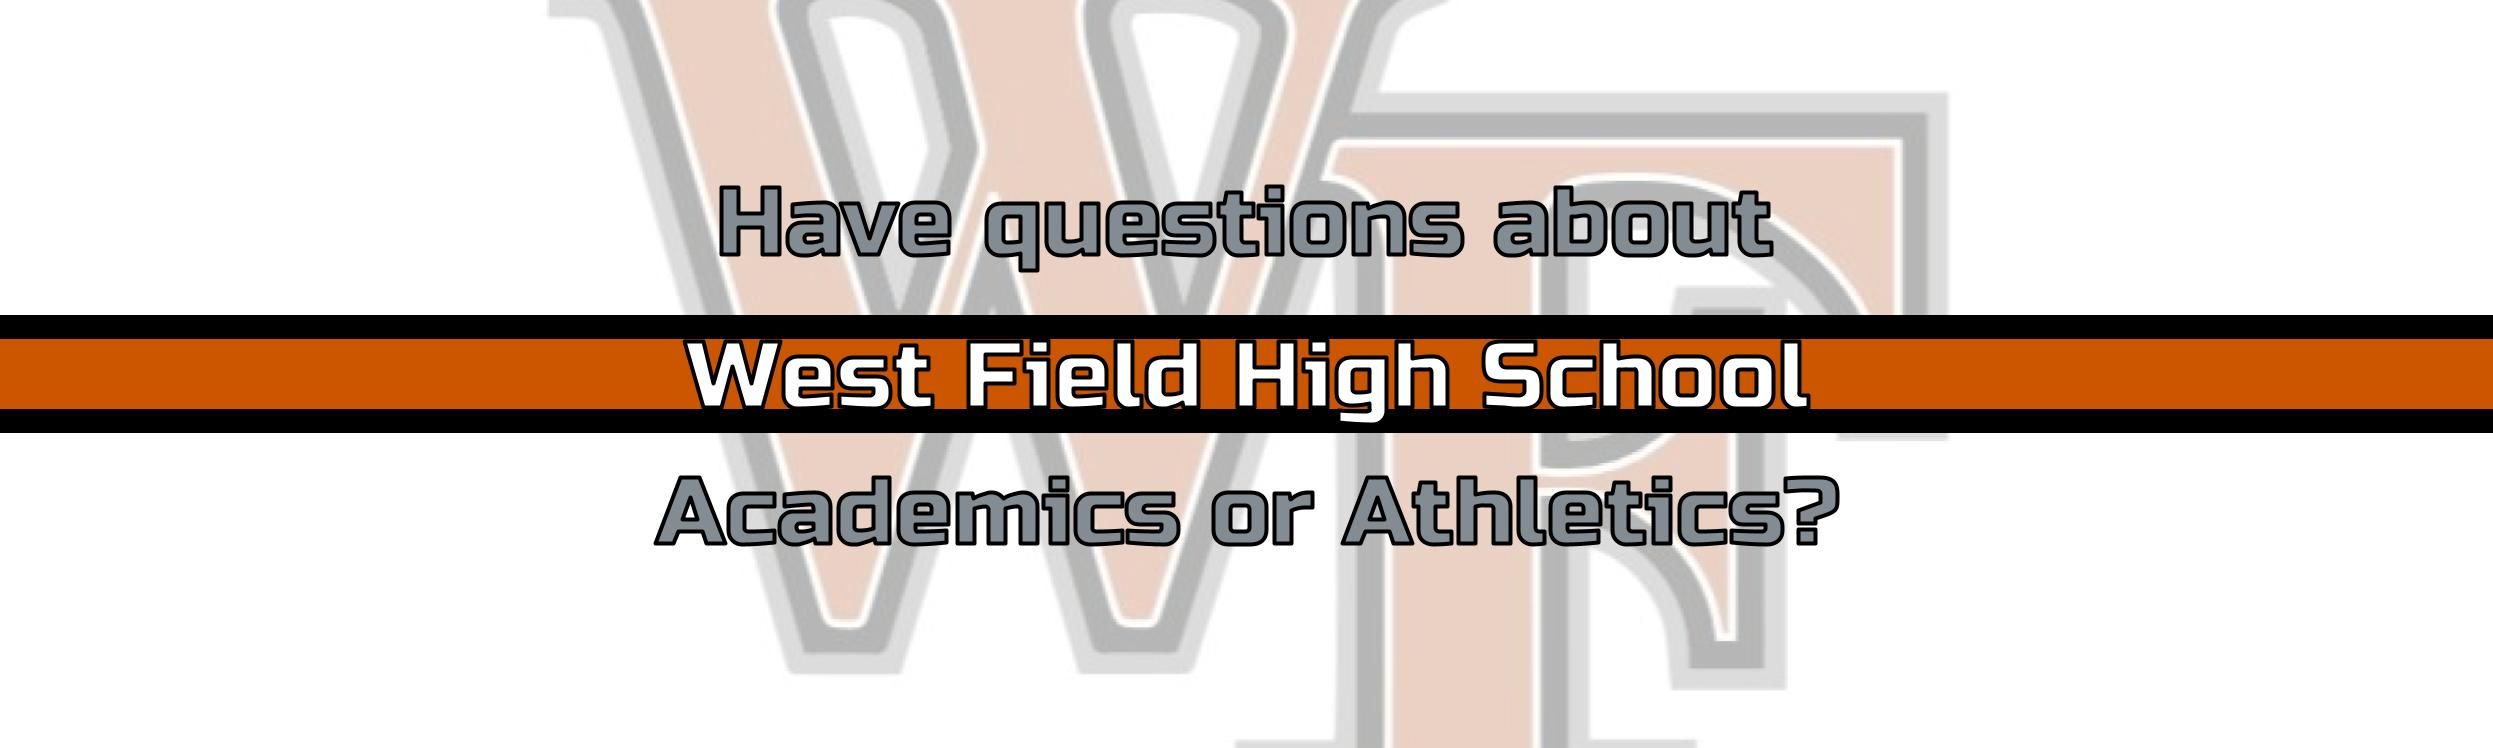 Westfield High School Academics and Athletics information